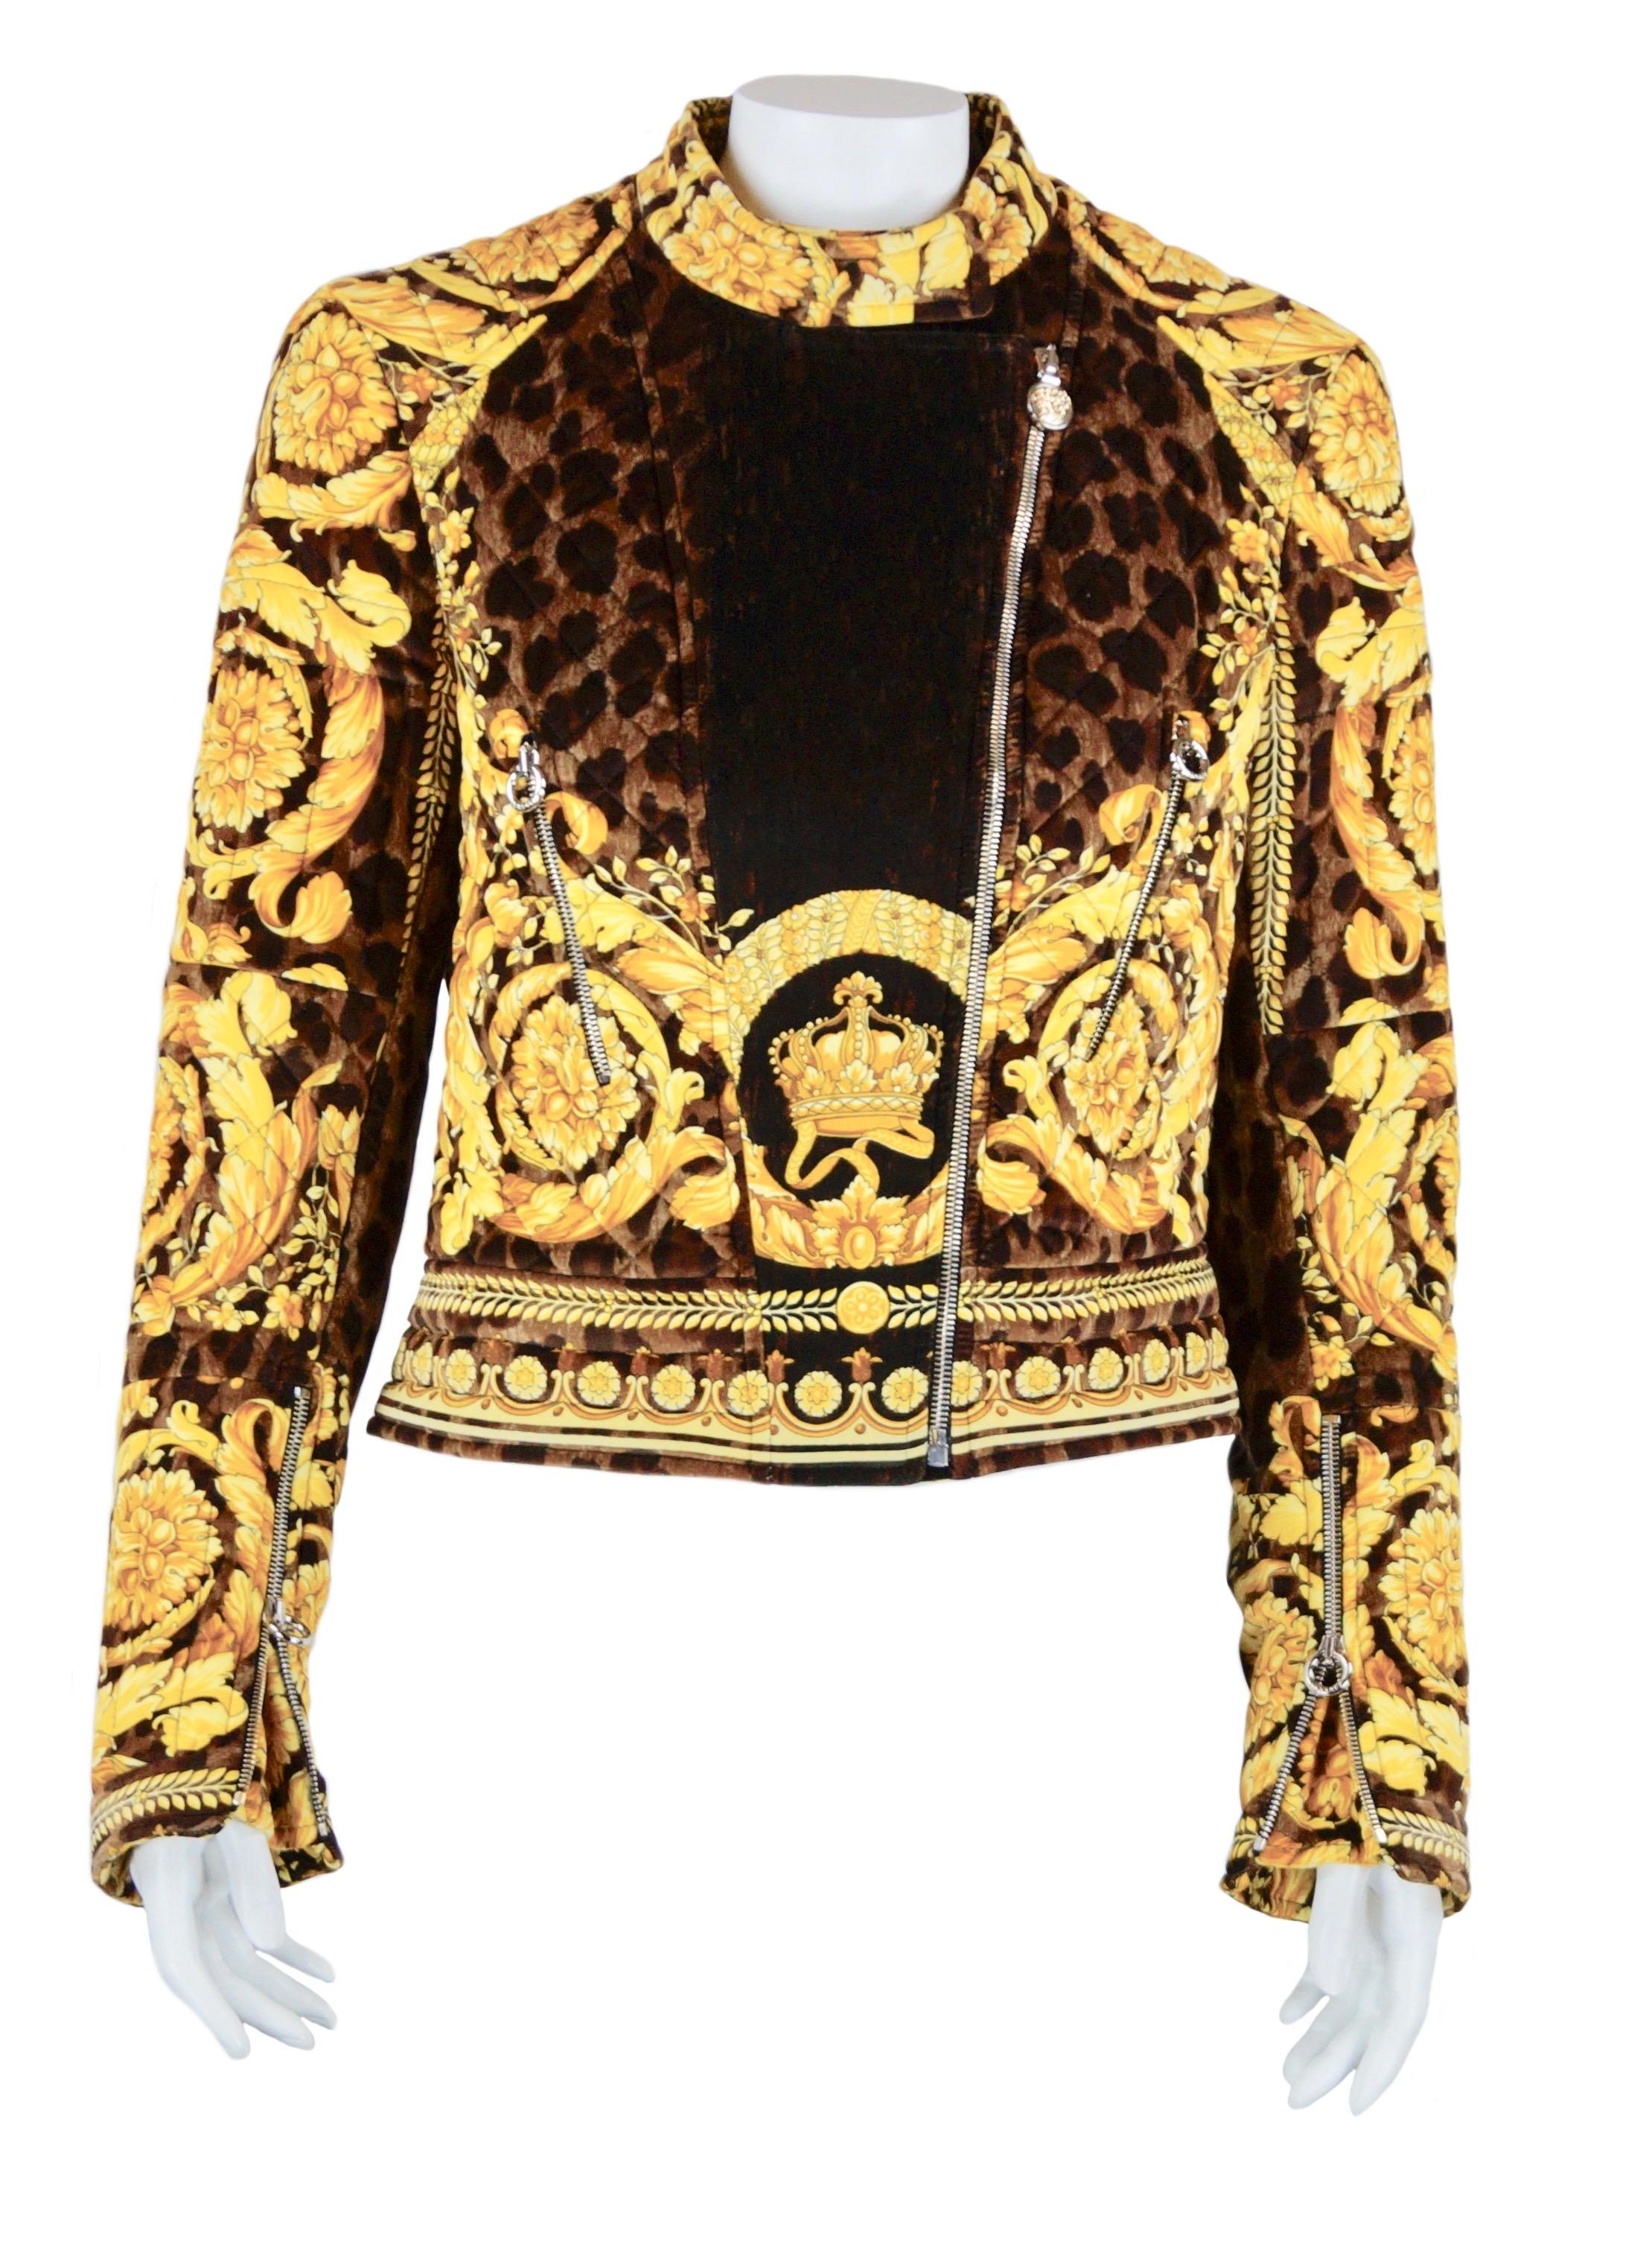 VERSACE velvet barocco dress and biker jacket pre fall 2011 For Sale 8